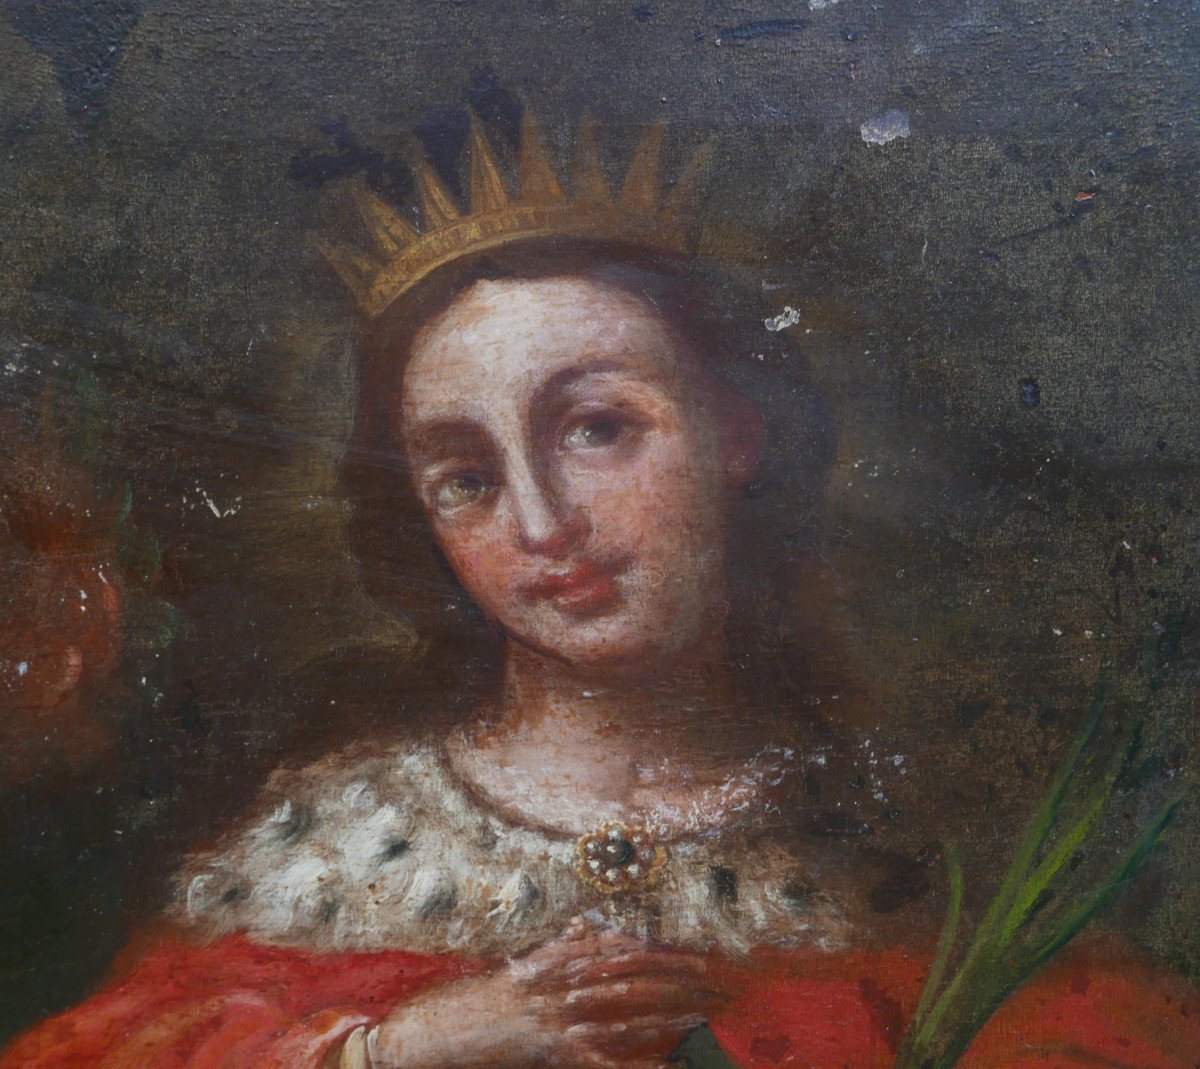 Religious Painting Portrait Of Saint Catherine Oil/panel Late 18th Century-photo-4